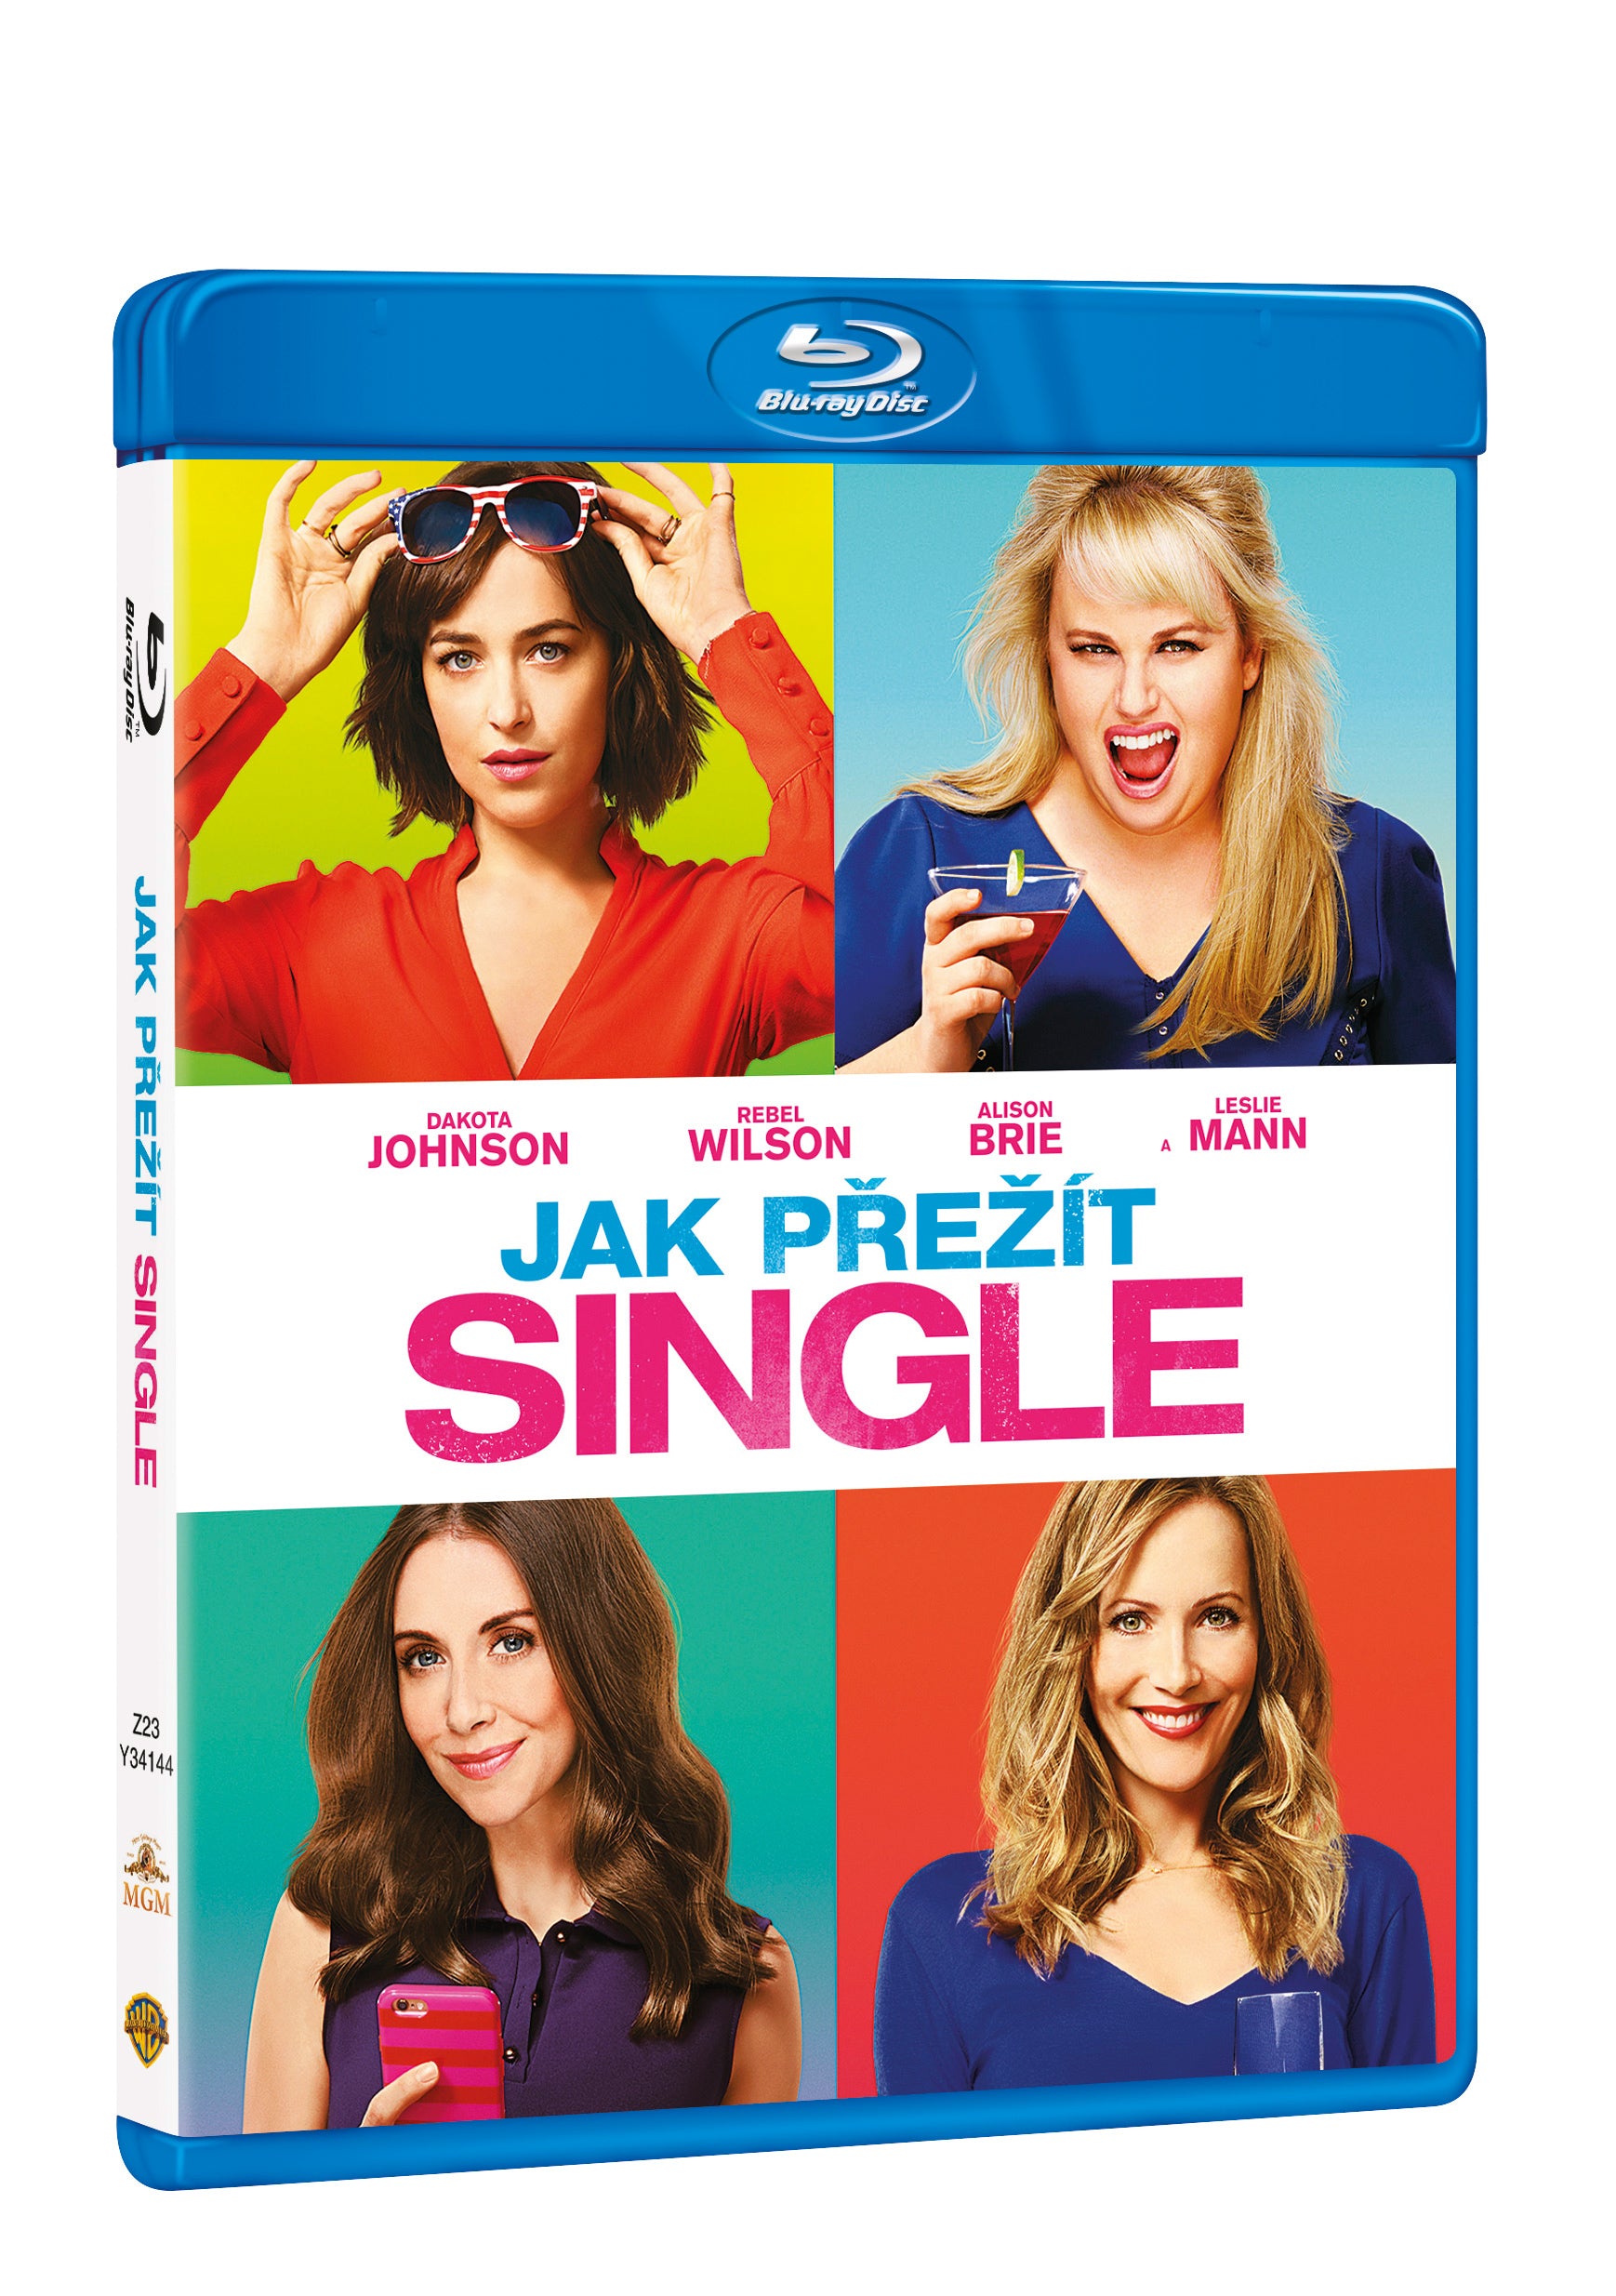 Jak prezit single BD / How to be Single - Czech version